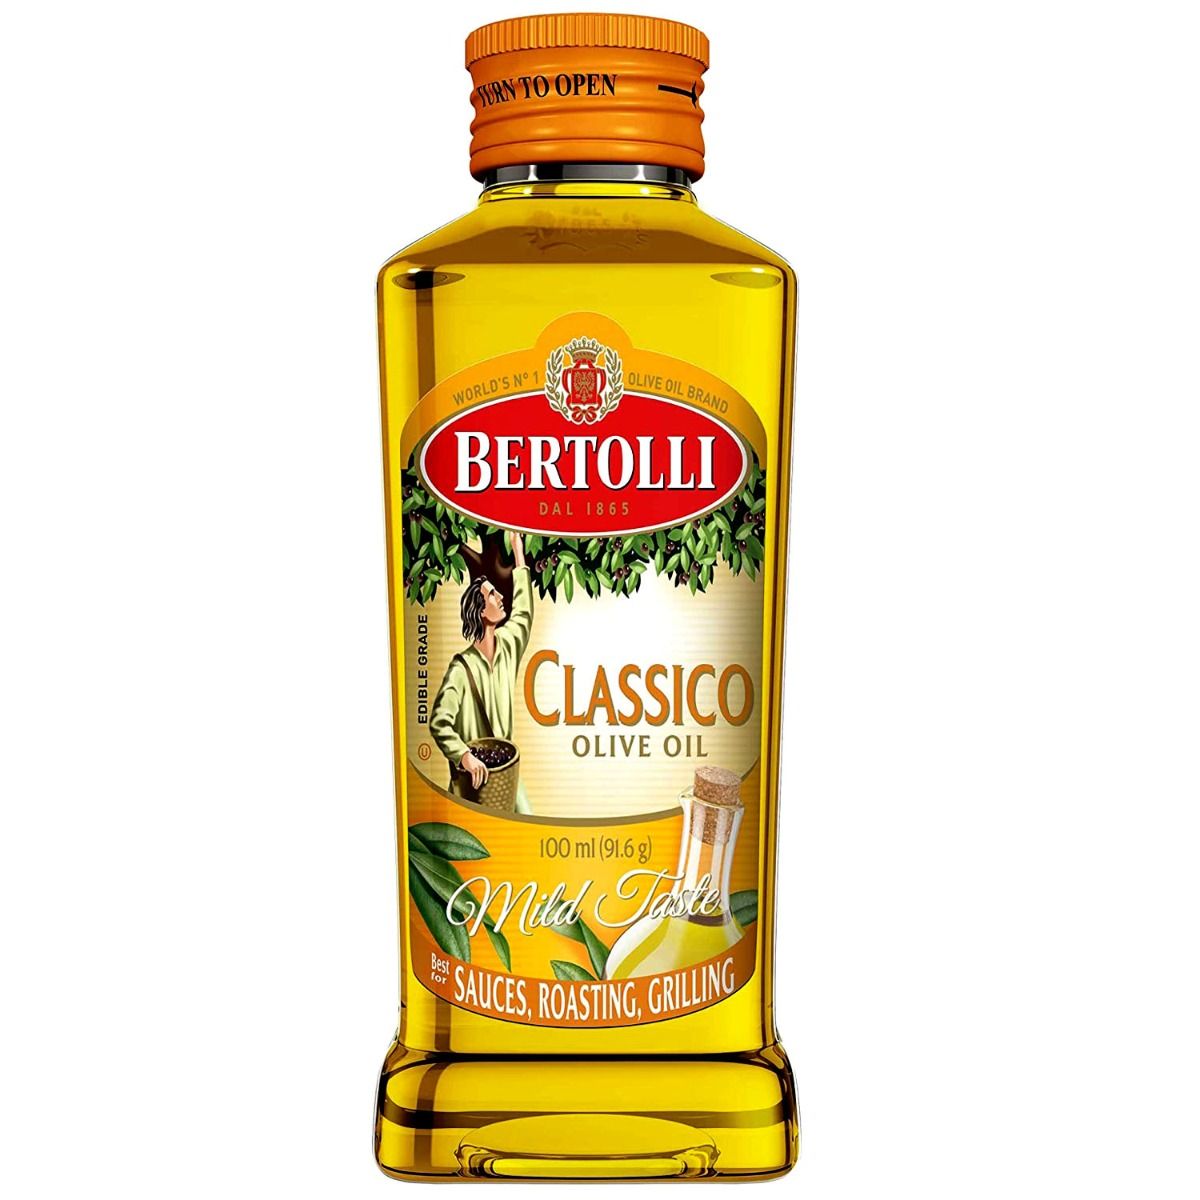 Buy Bertolli Classico Olive Oil, 100 ml Online